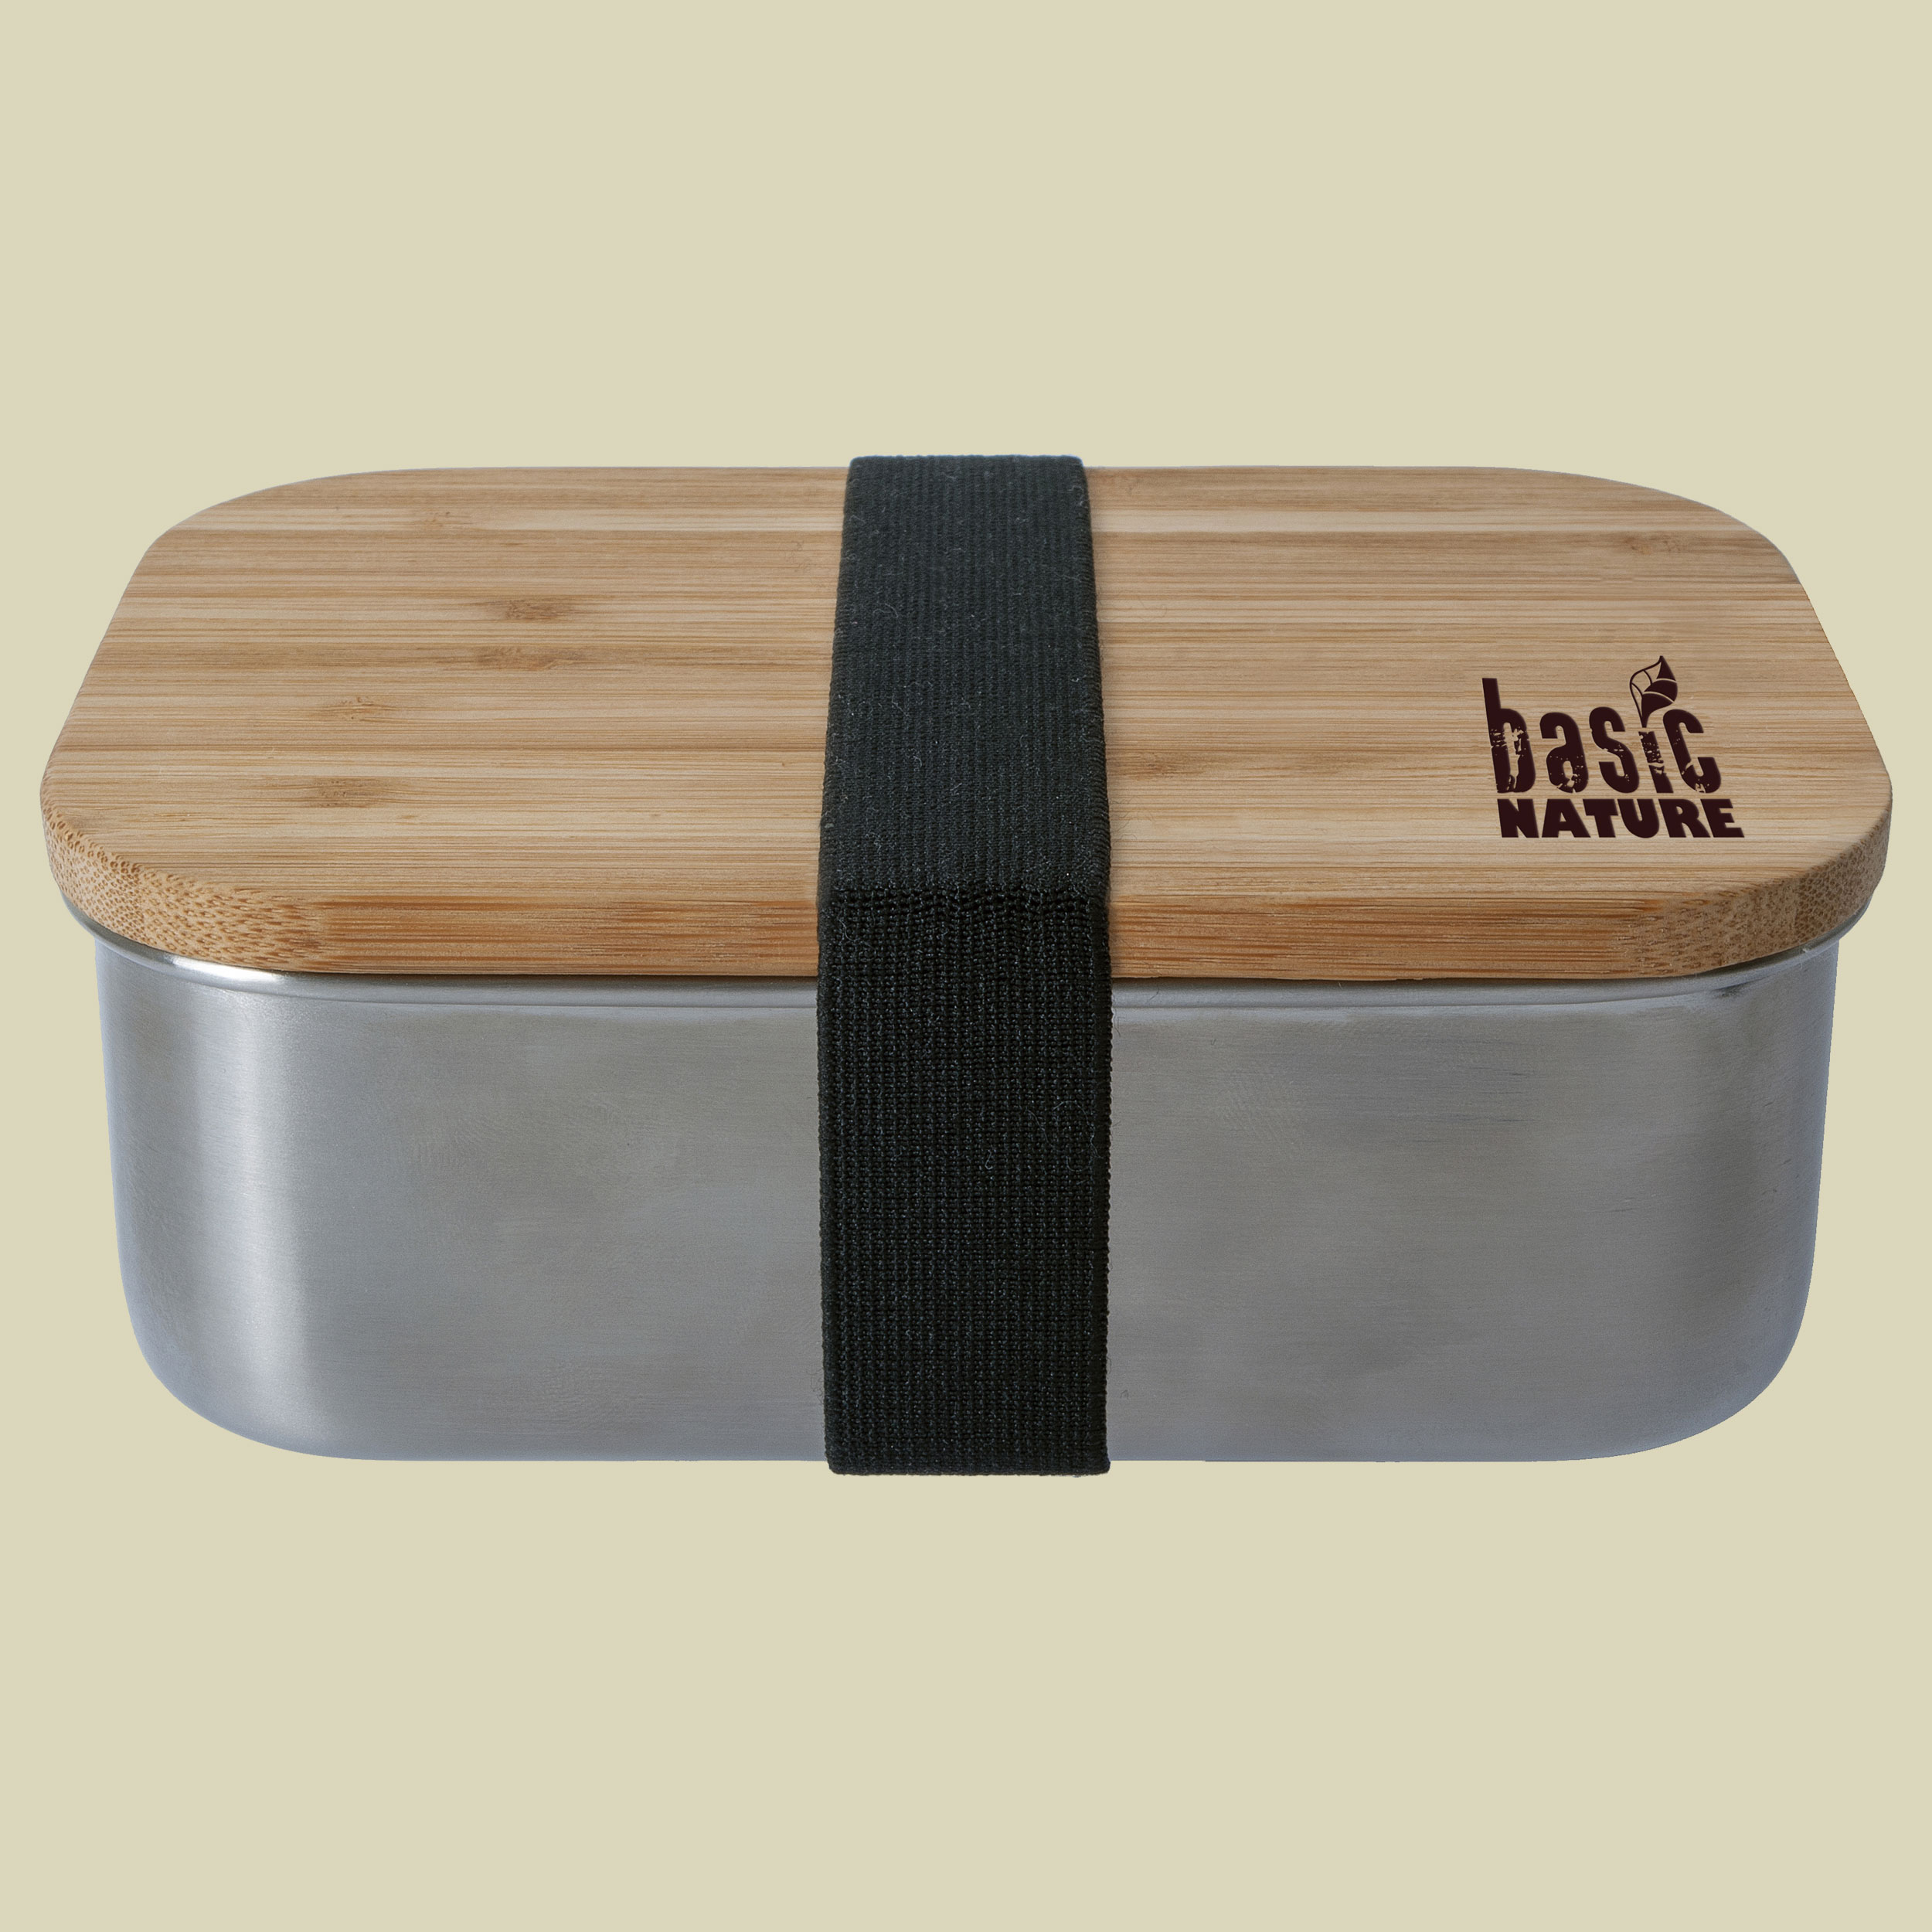 BasicNature Lunchbox Bamboo Volumen 0,8 L Farbe edelstahl